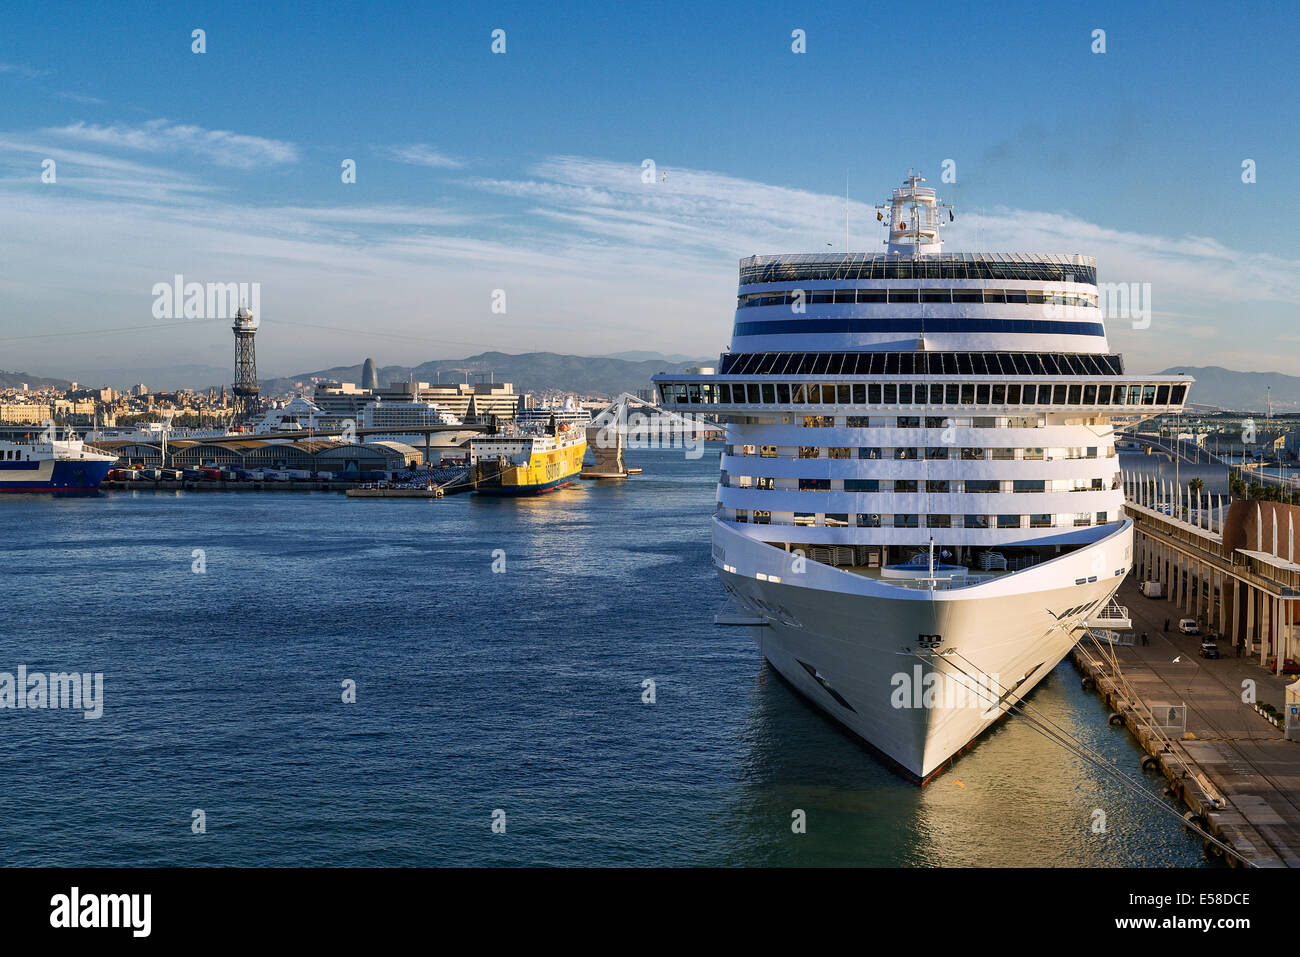 Cruise ship docked in harbor, Barcelona, Spain Stock Photo